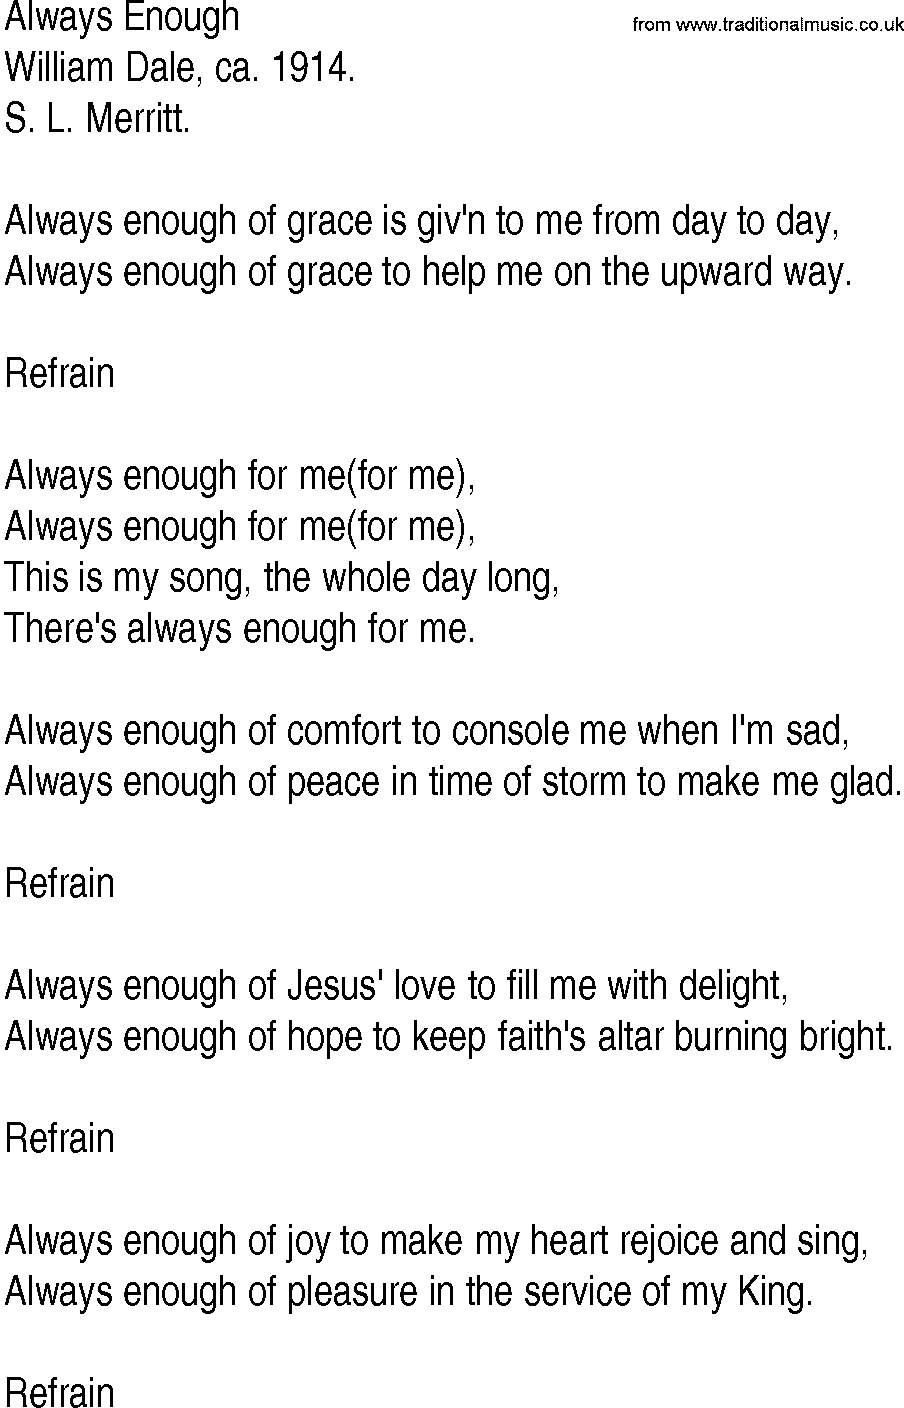 Hymn and Gospel Song: Always Enough by William Dale ca lyrics